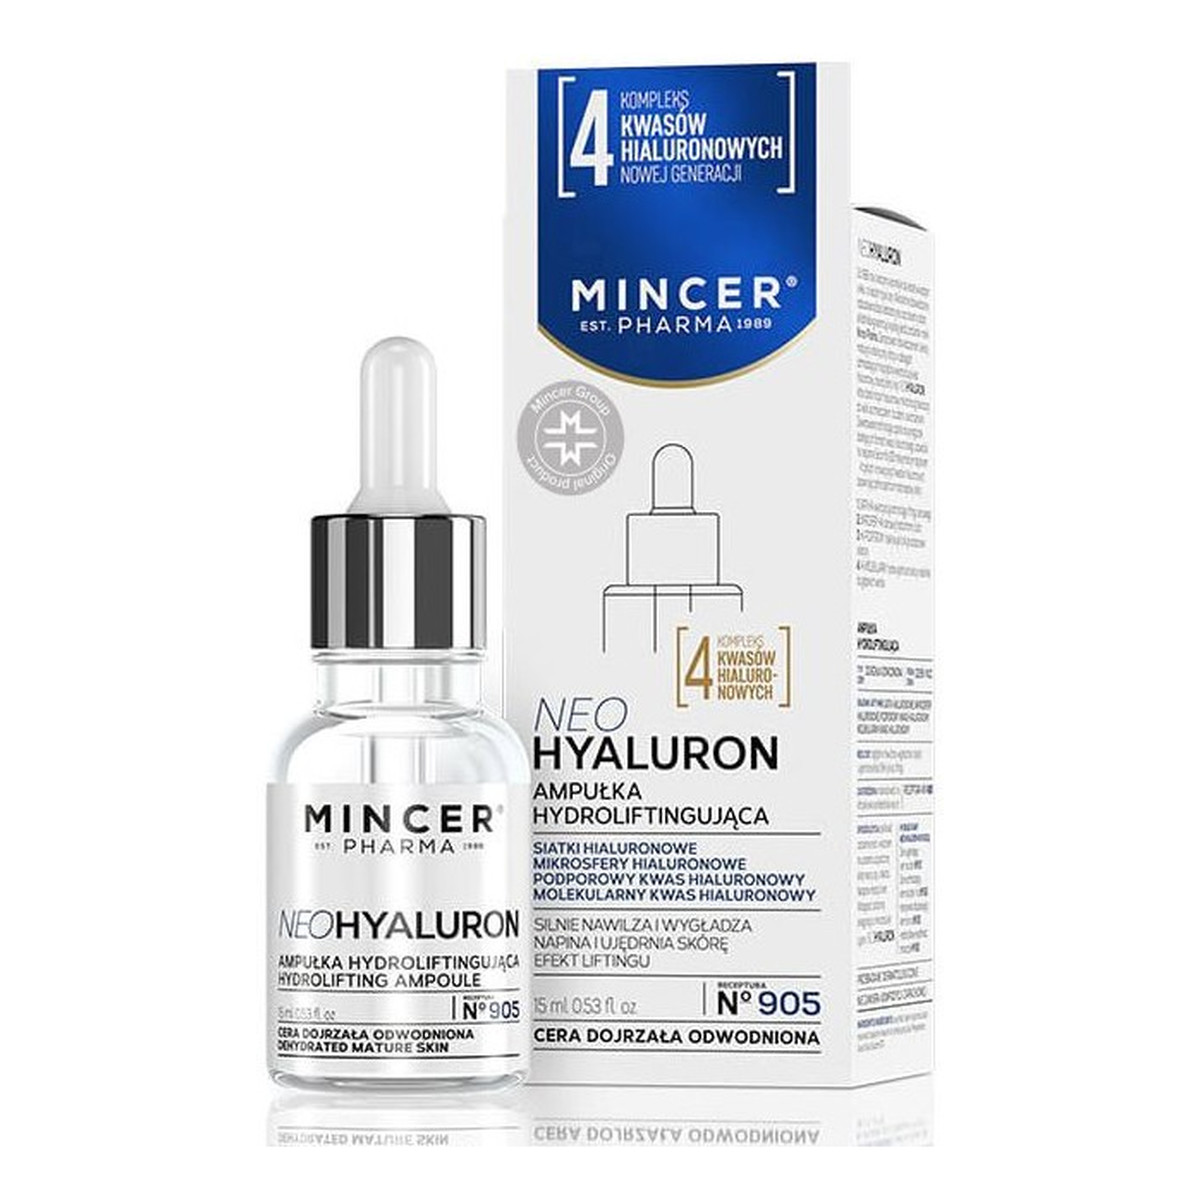 Mincer Pharma Neo Hyaluron 905 AMPUŁKA HYDROLIFTINGUJĄCA 15ml